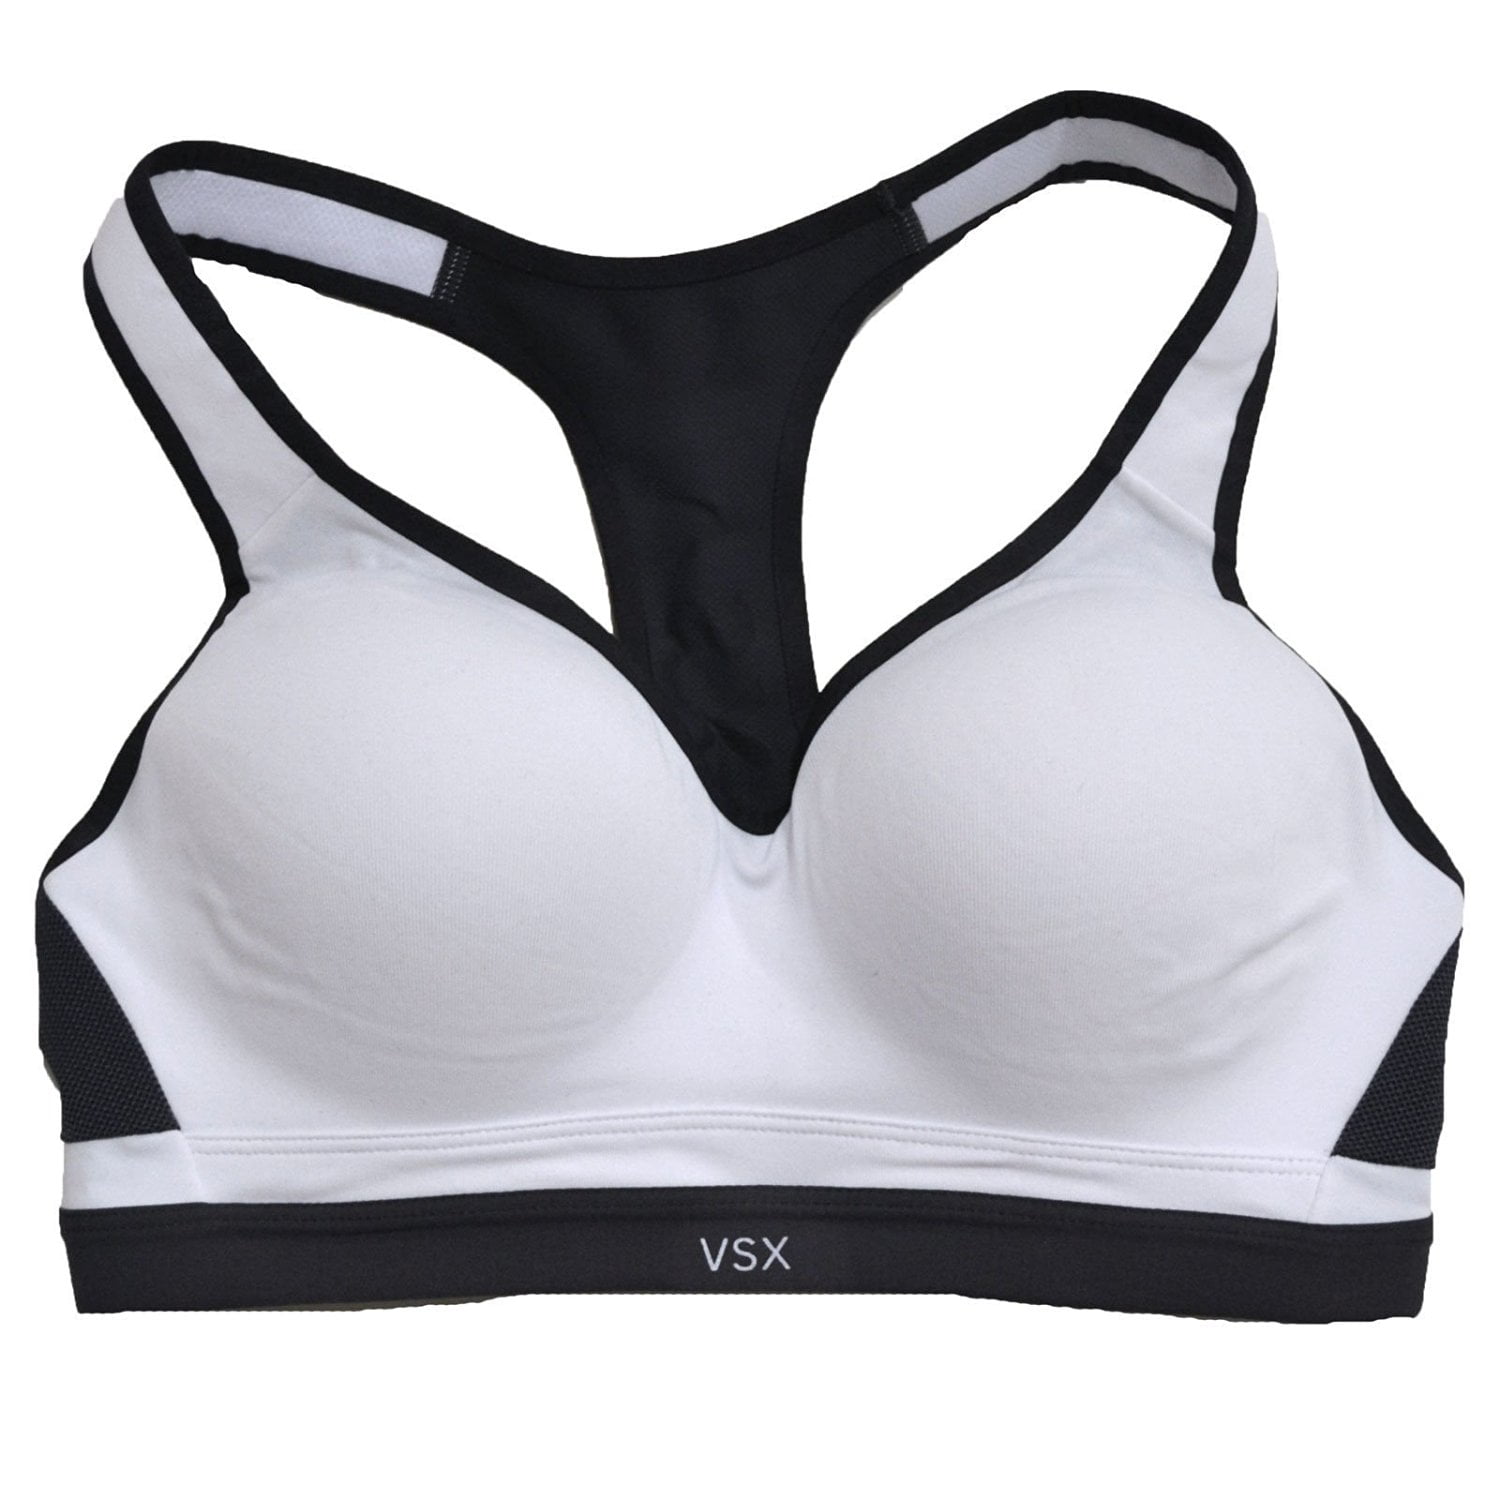 Victoria's Secret VICTORIA SECRET SPORT Sports Bra 34DD Gray VSX Knockout  Racerback Athletic Gym Size undefined - $35 - From Leigh